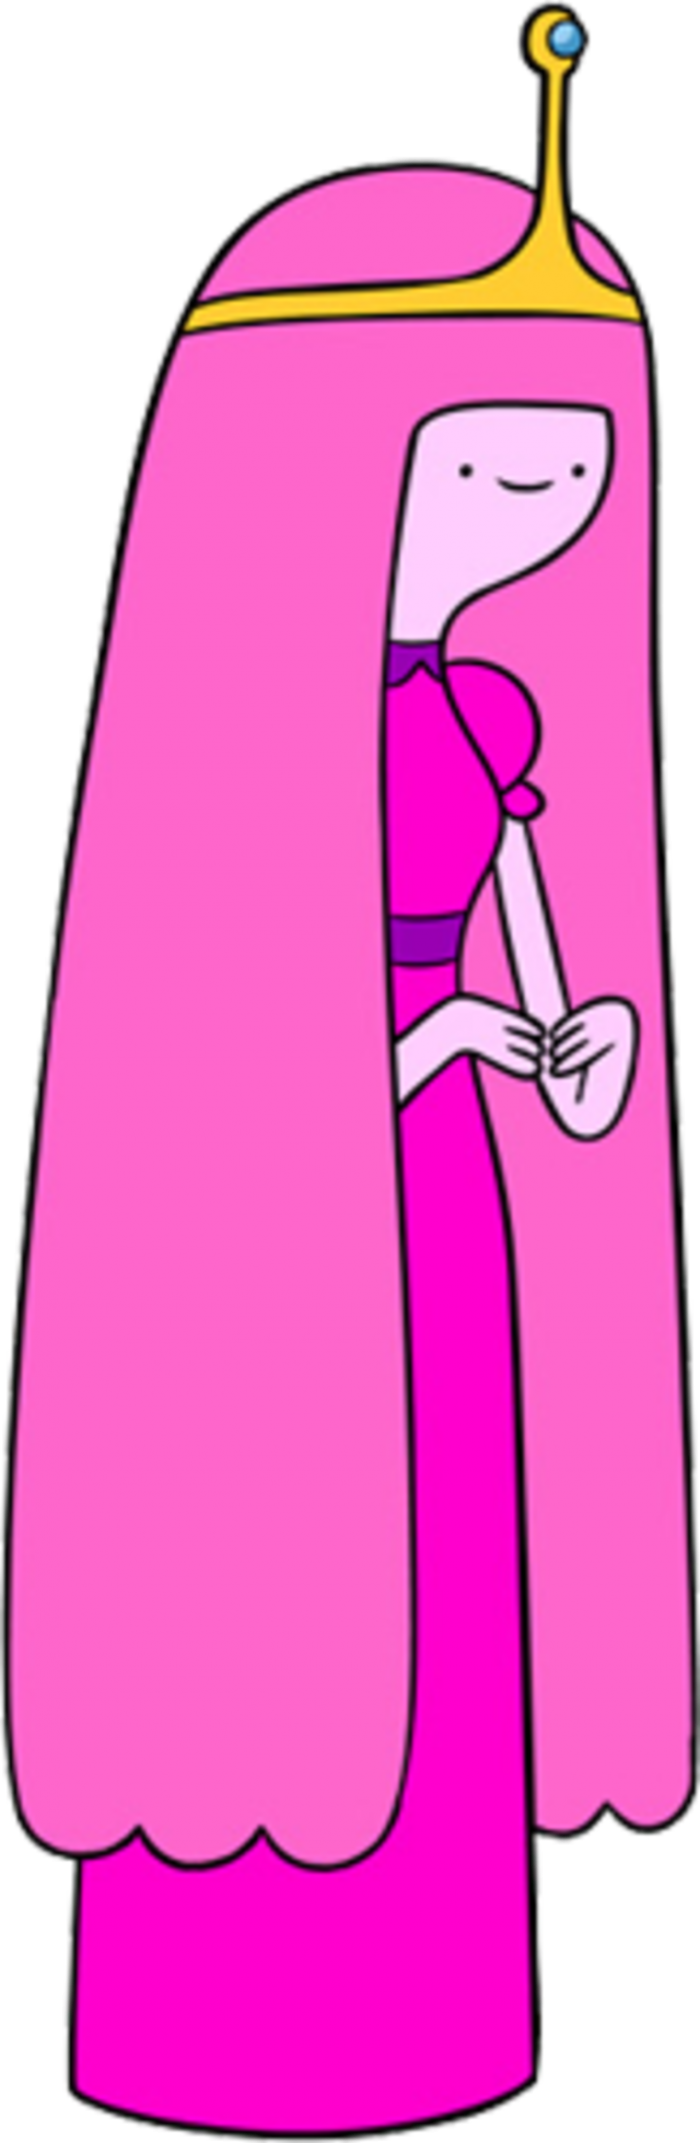 Princess Bubblegum Marceline The Vampire Queen Finn - Hynden Walch Princess Bubblegum (700x2143)